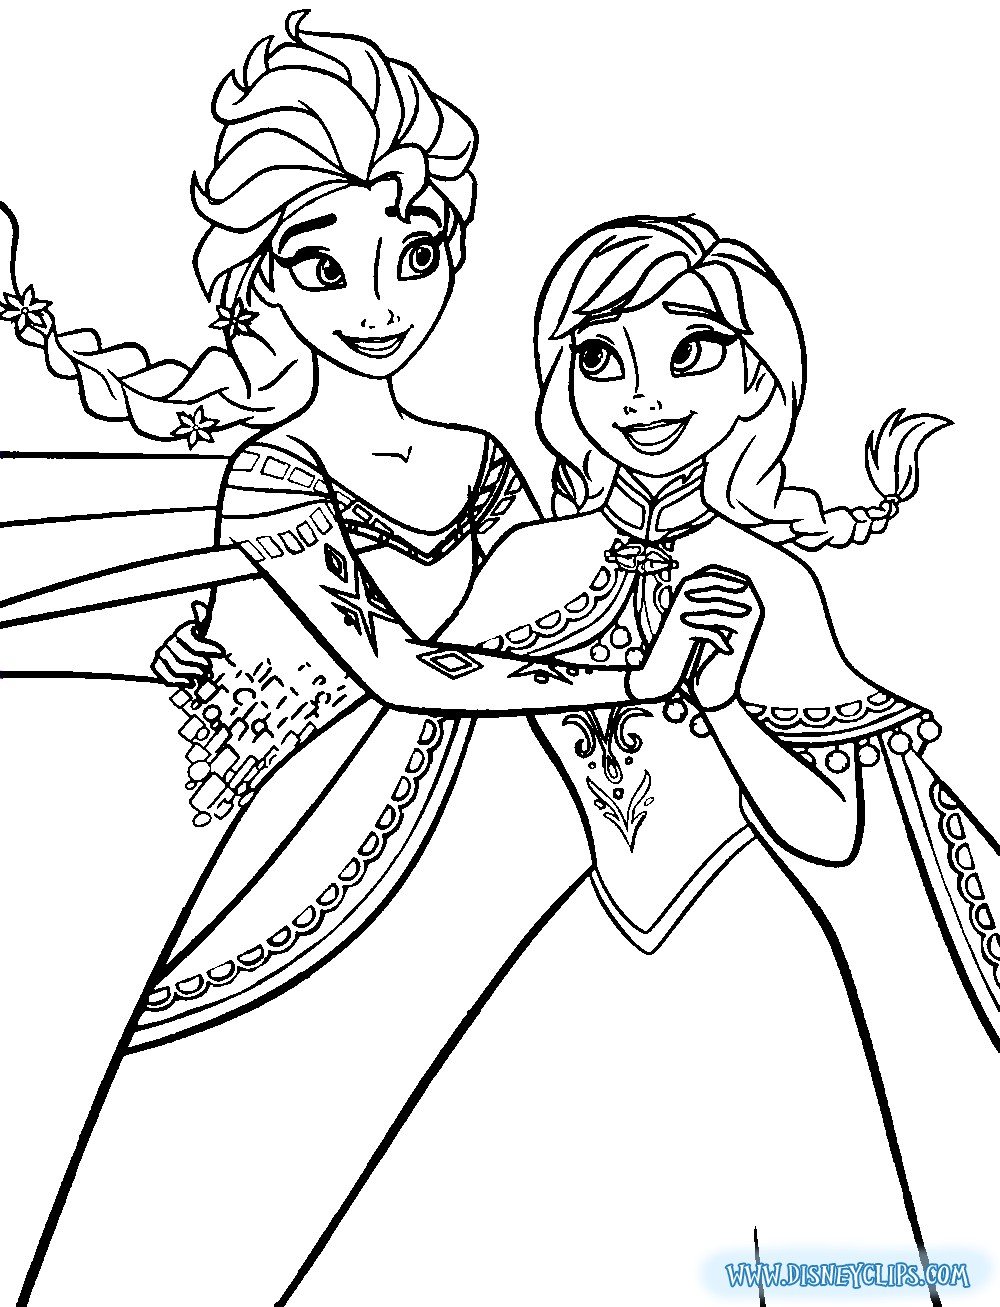 Disney Princess Coloring Pages Frozen Elsa and Anna Wallpaper